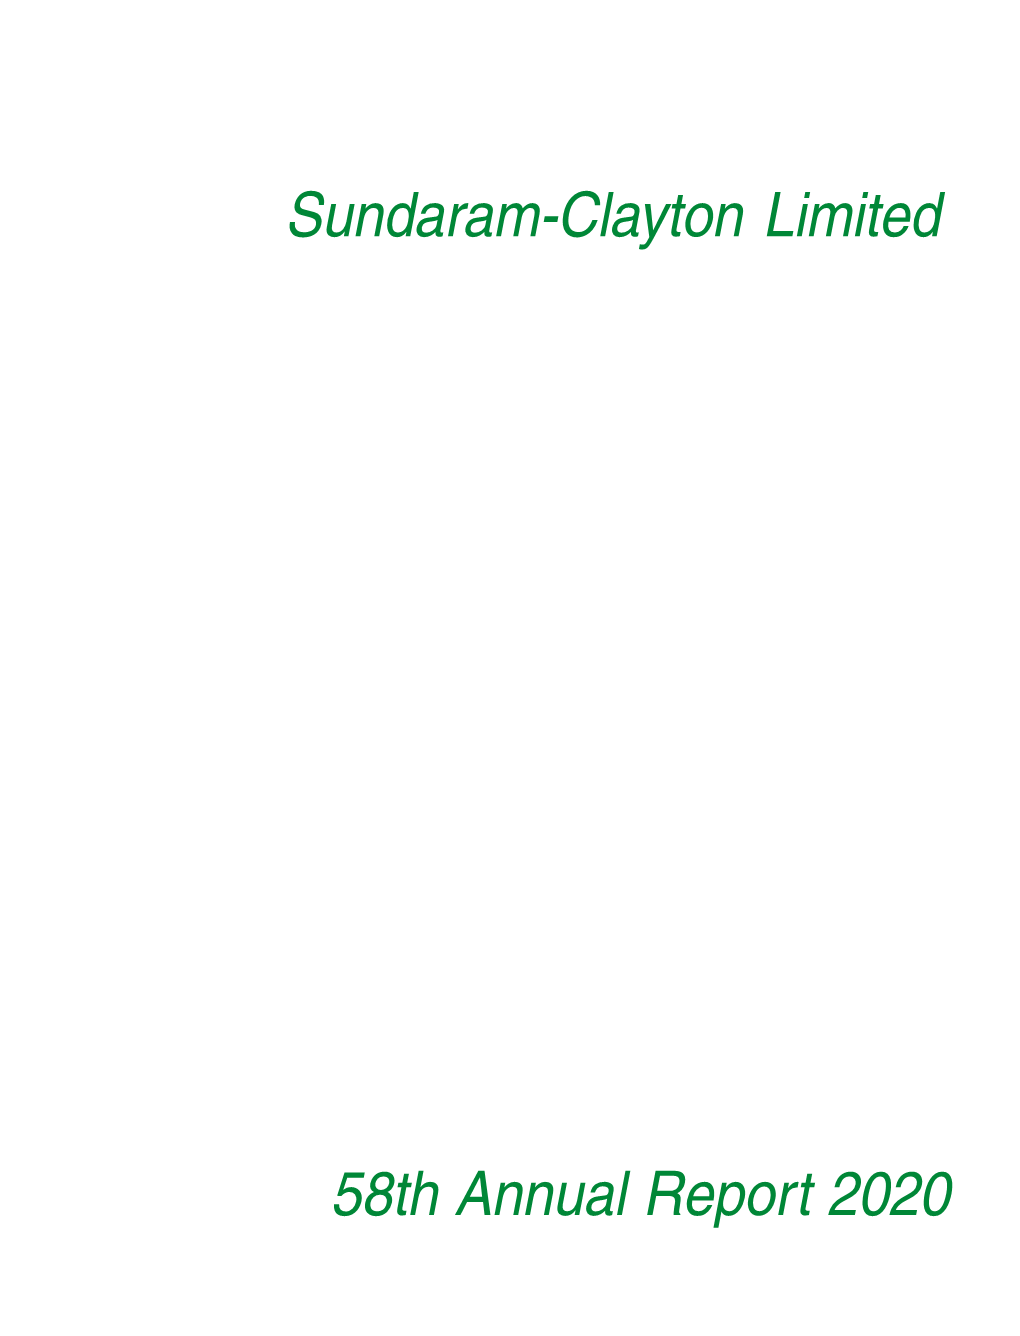 Annual Report 2020 Sundaram-Clayton Limited